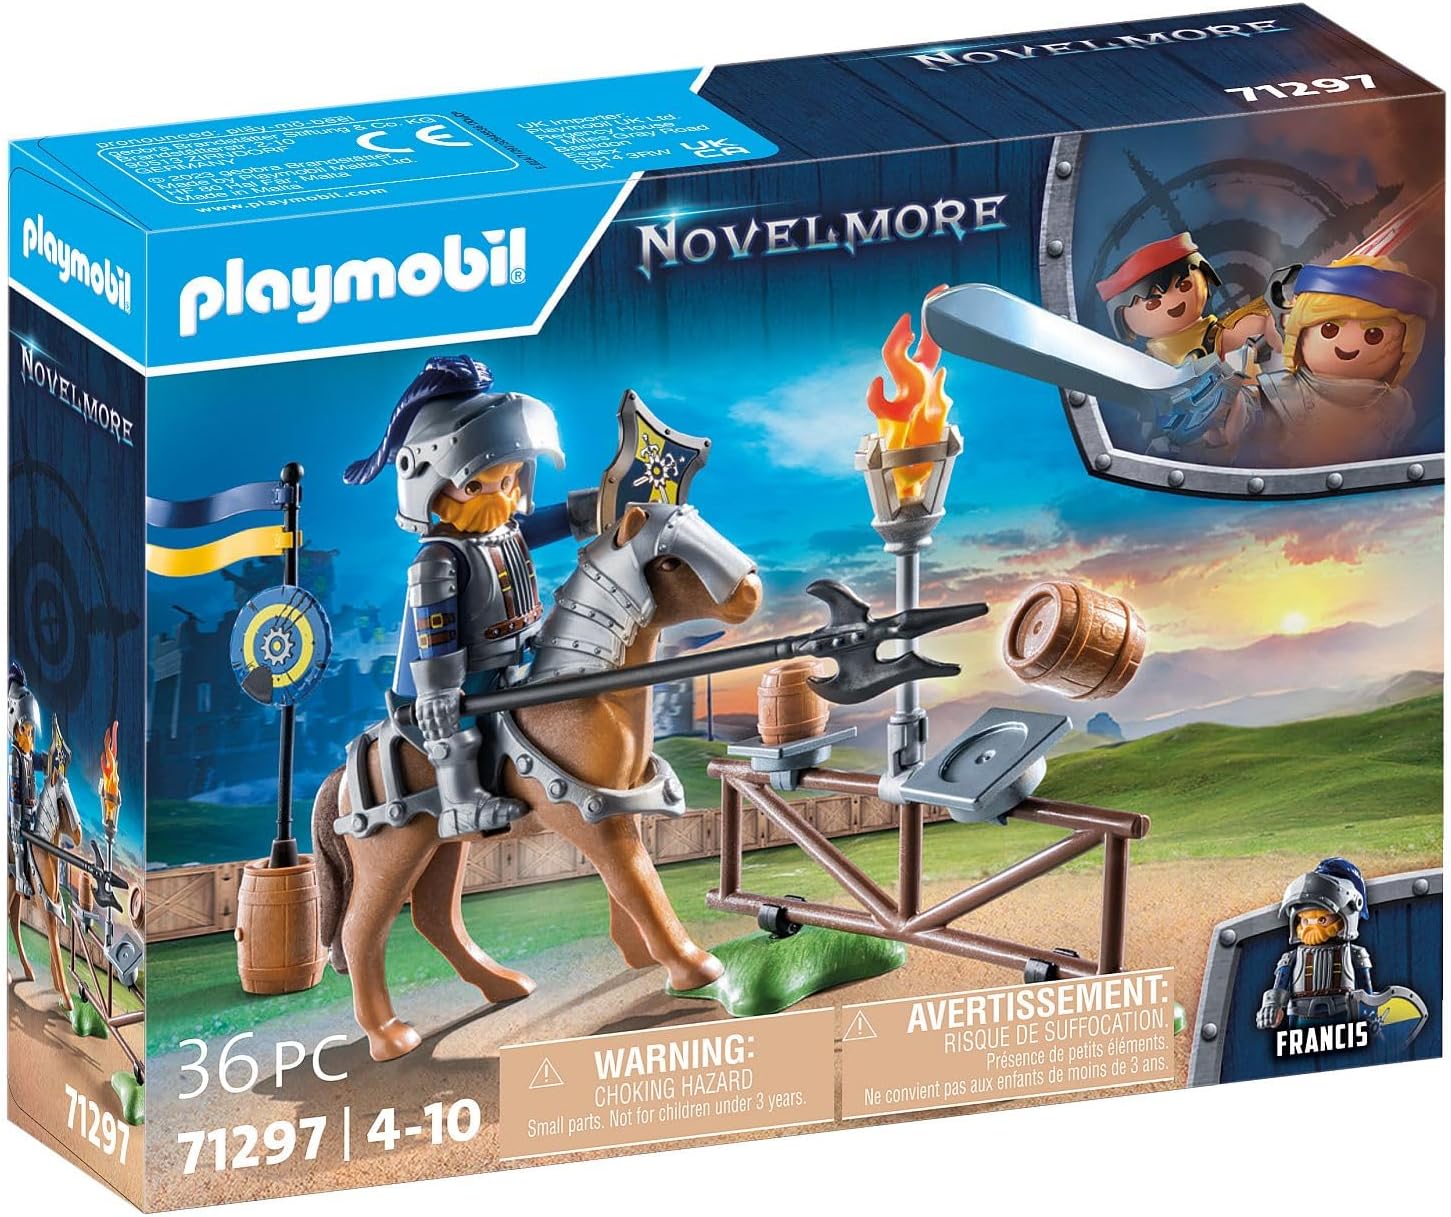 Playmobil Novelmore - Gwynn with Combat Equipment - A2Z Science